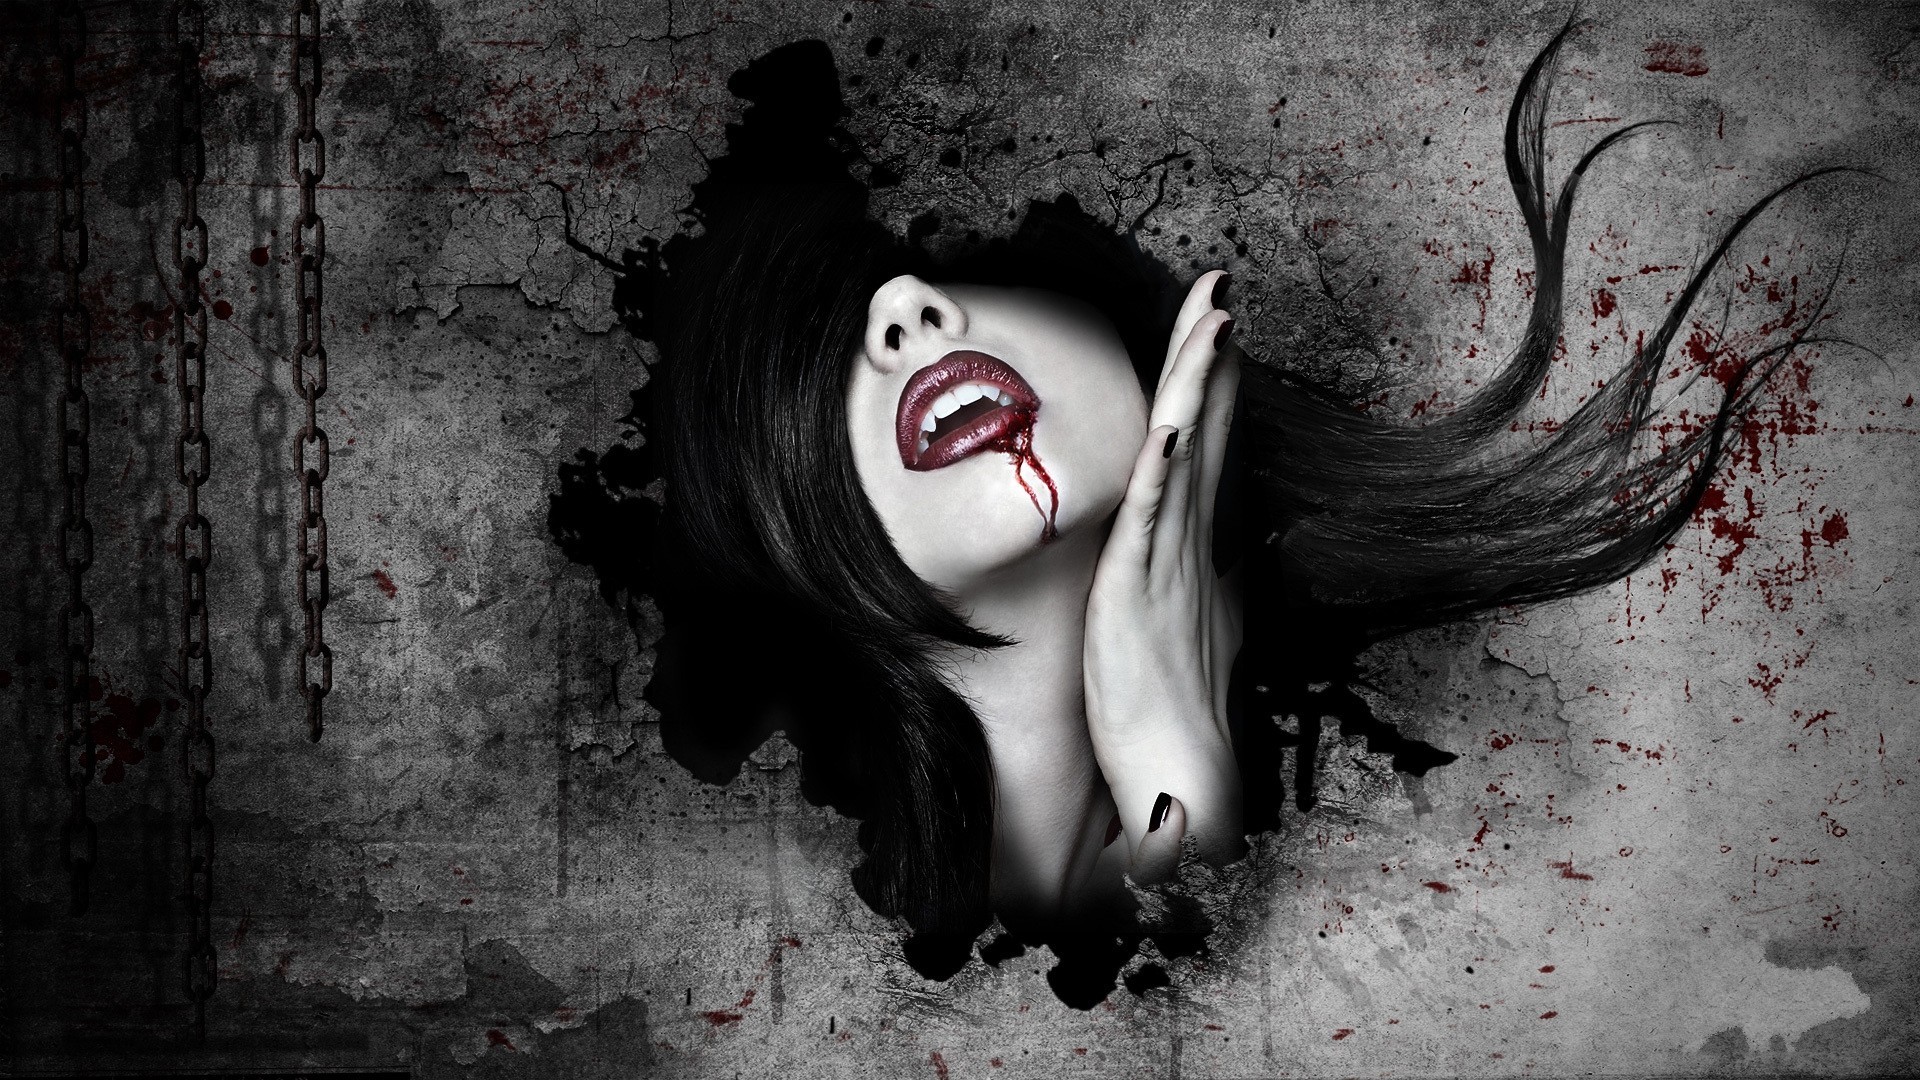 1920x1080 Download wallpaper dark Vampire with tags: Dark, Woman, Beautiful, PC,  Black, Fantasy, Vampire, Blood, Lipstick, Fangs